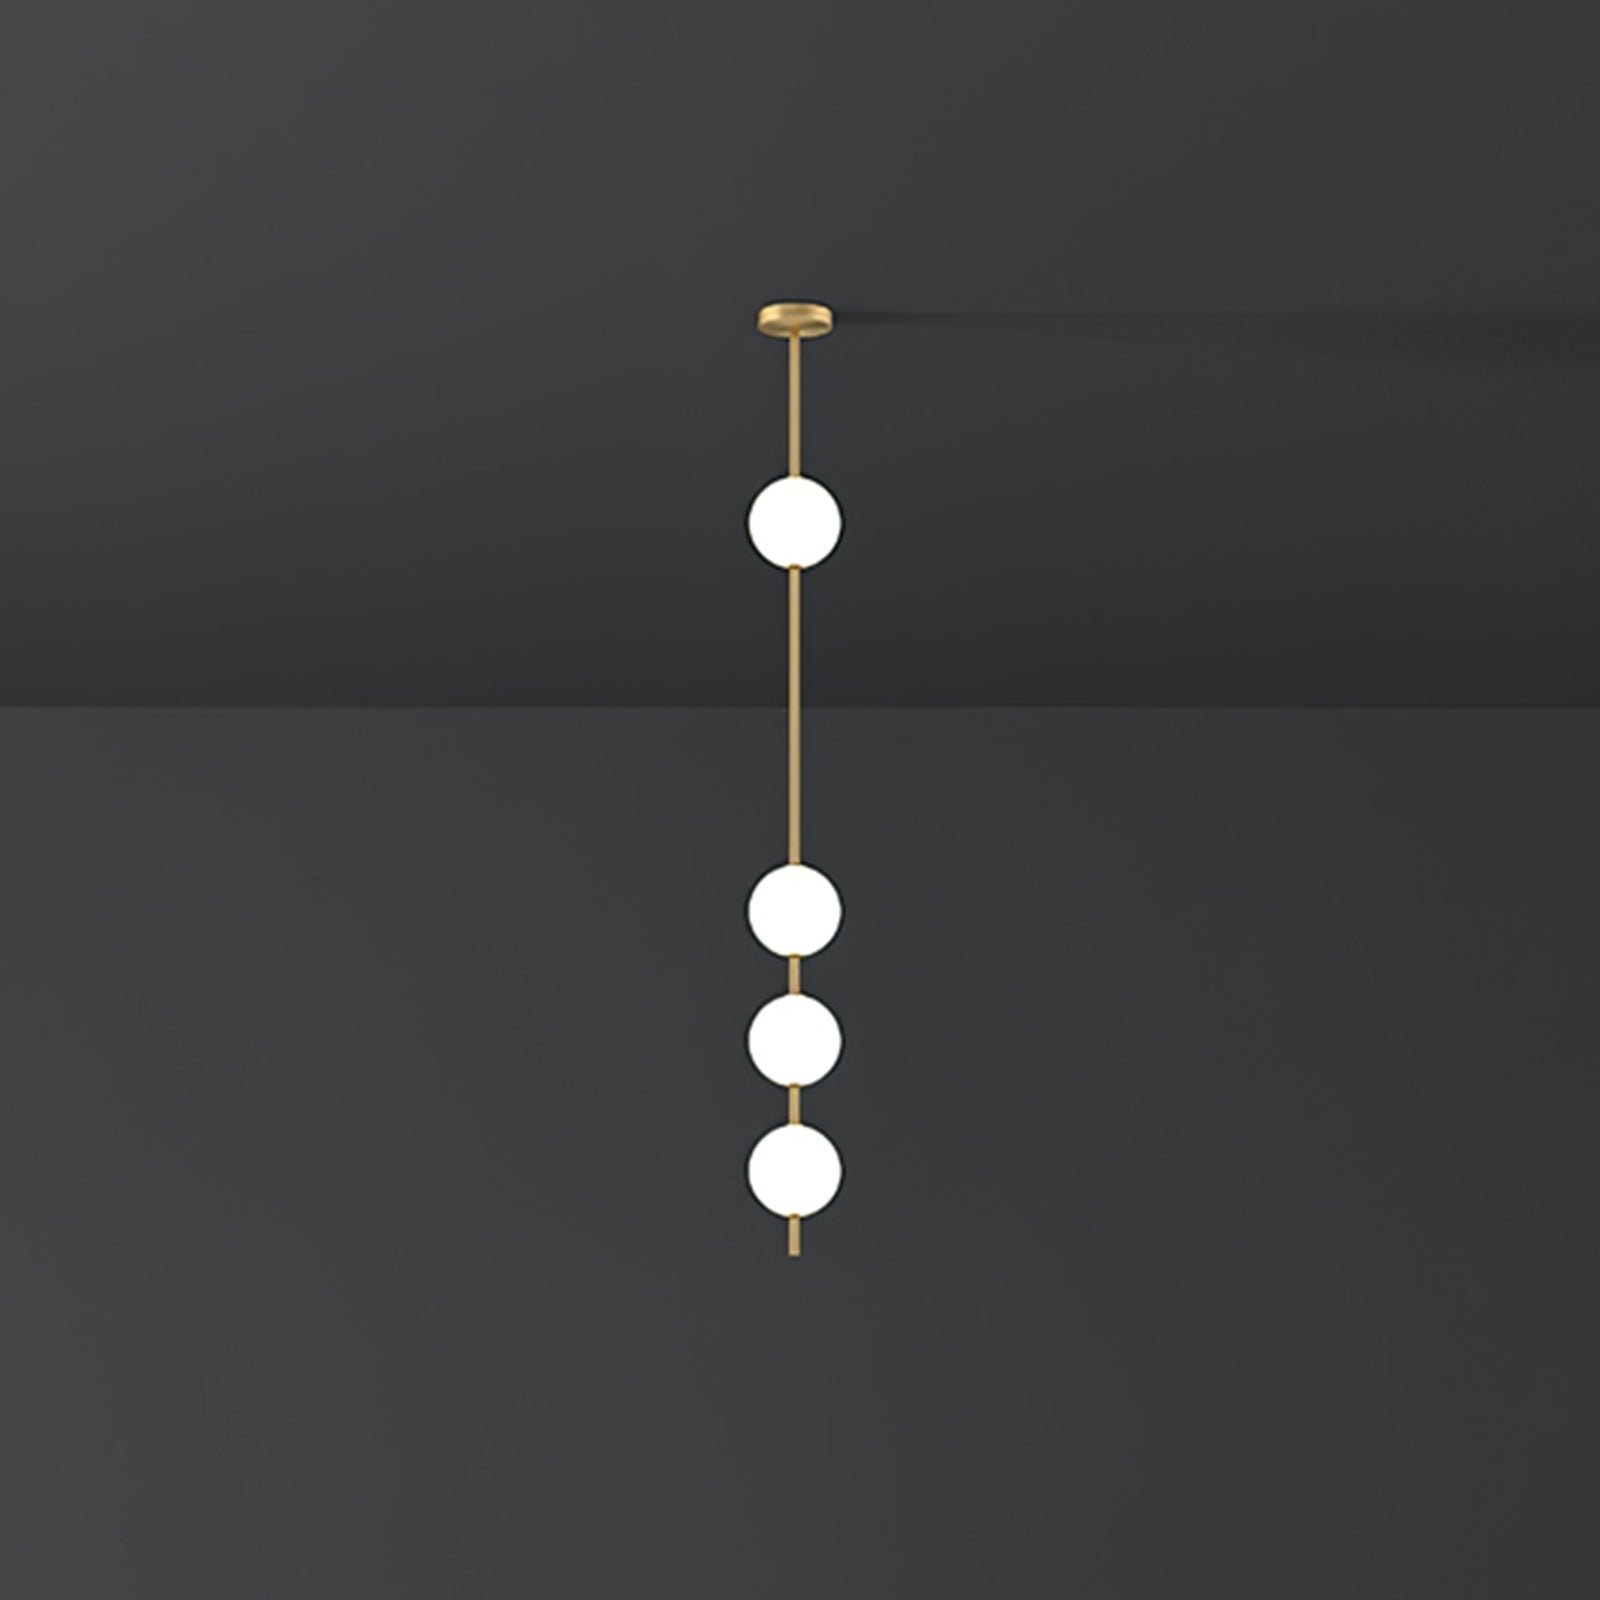 Vertical Balls Pendant Lamp with 4 Lamps - Brass/White, Warm White Illumination - Dimensions: Diameter 4.7 inches x Height 49.6 inches / Diameter 12cm x Height 126cm